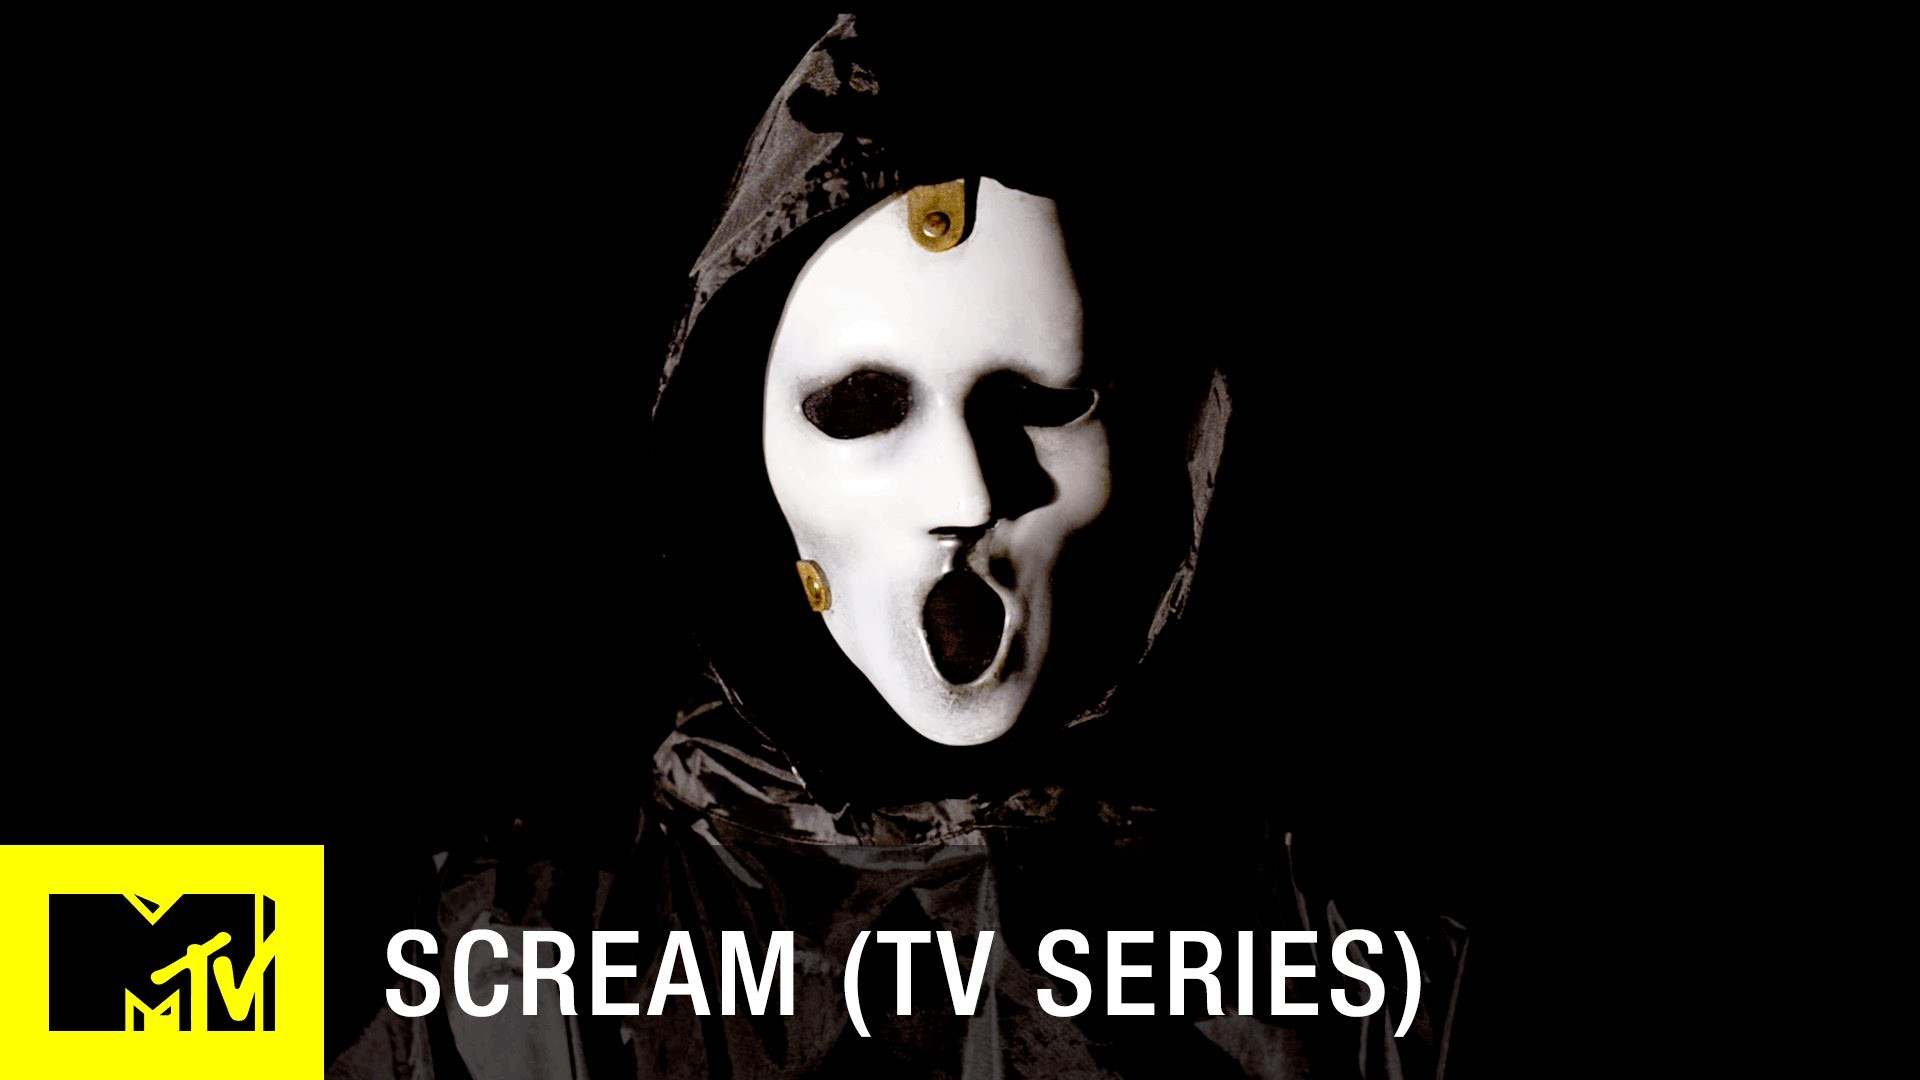 1920x1080 Best 25 Scream queens ideas only on Pinterest | Scream queens 2 ... Scream  Wallpaper ...